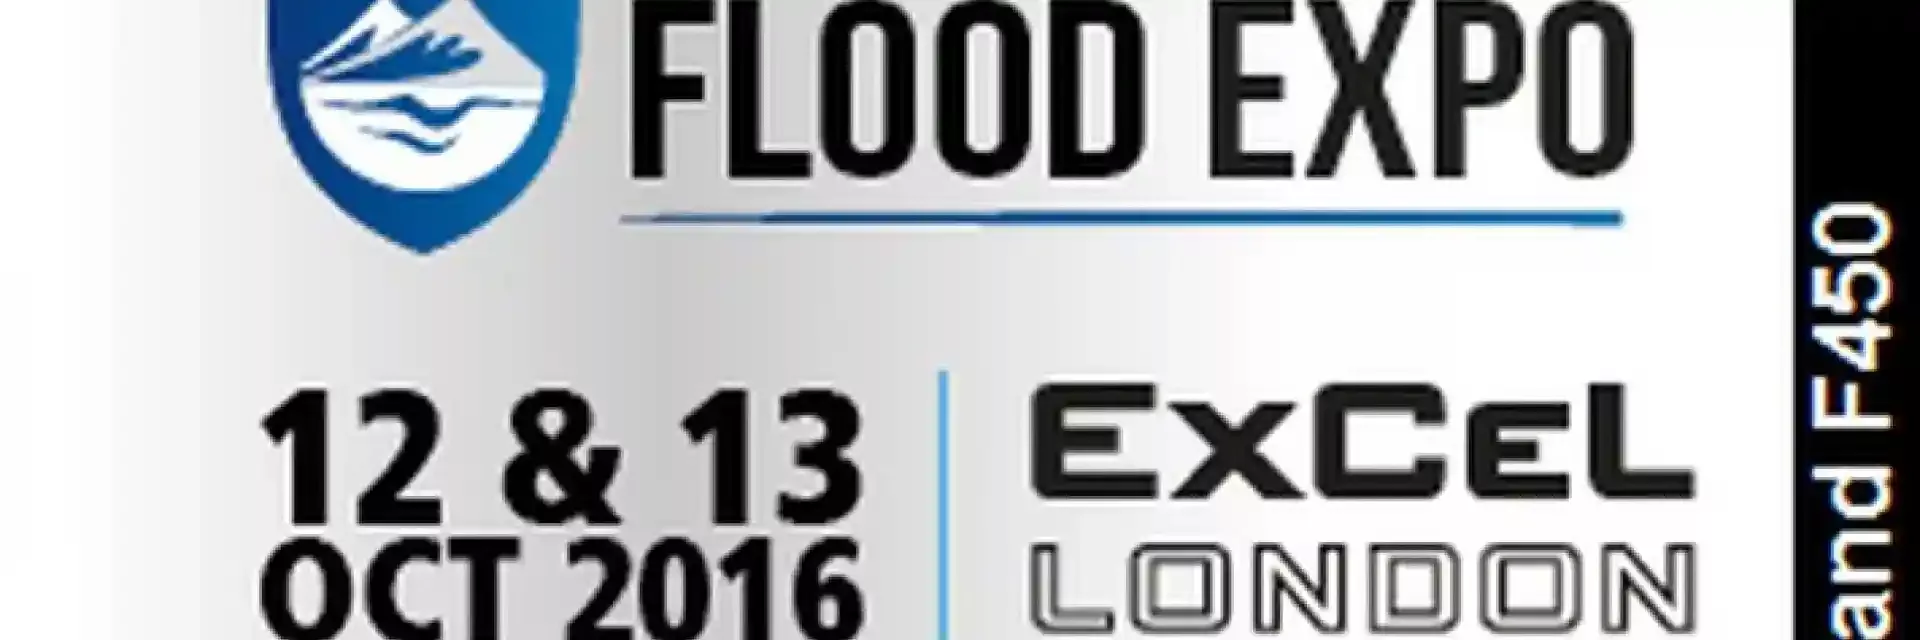 flood expo banner